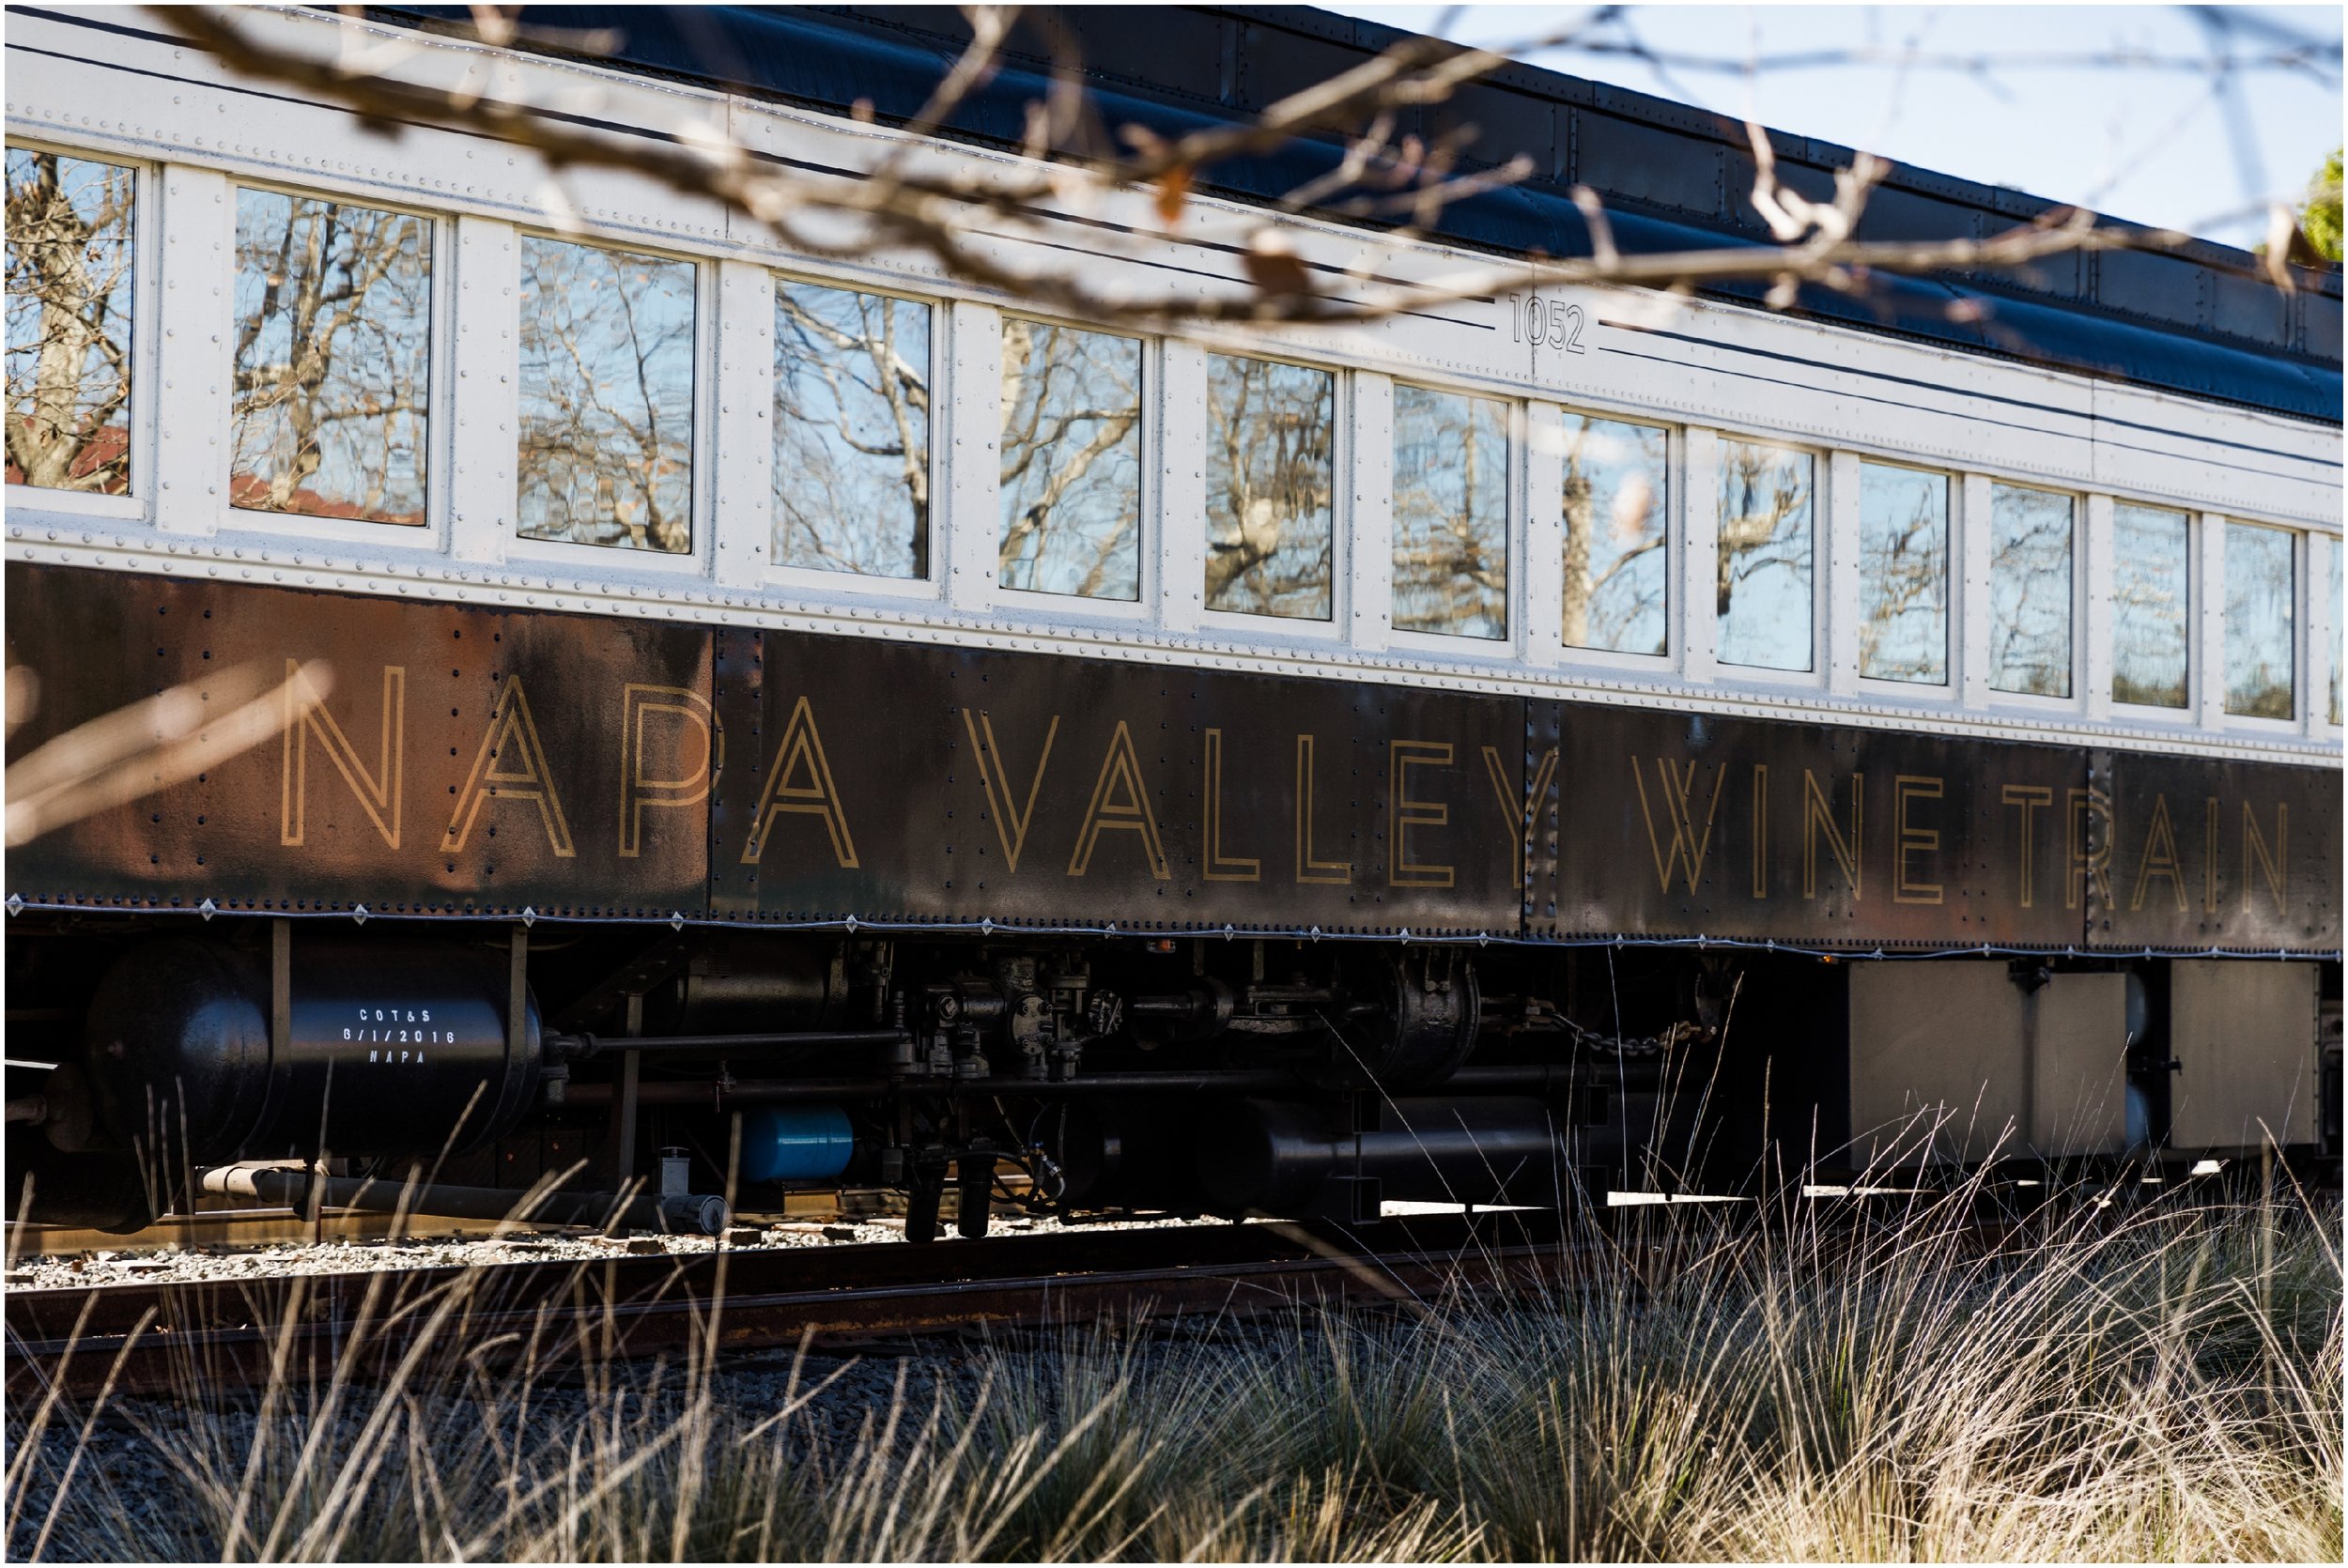 Napa Valley wine train